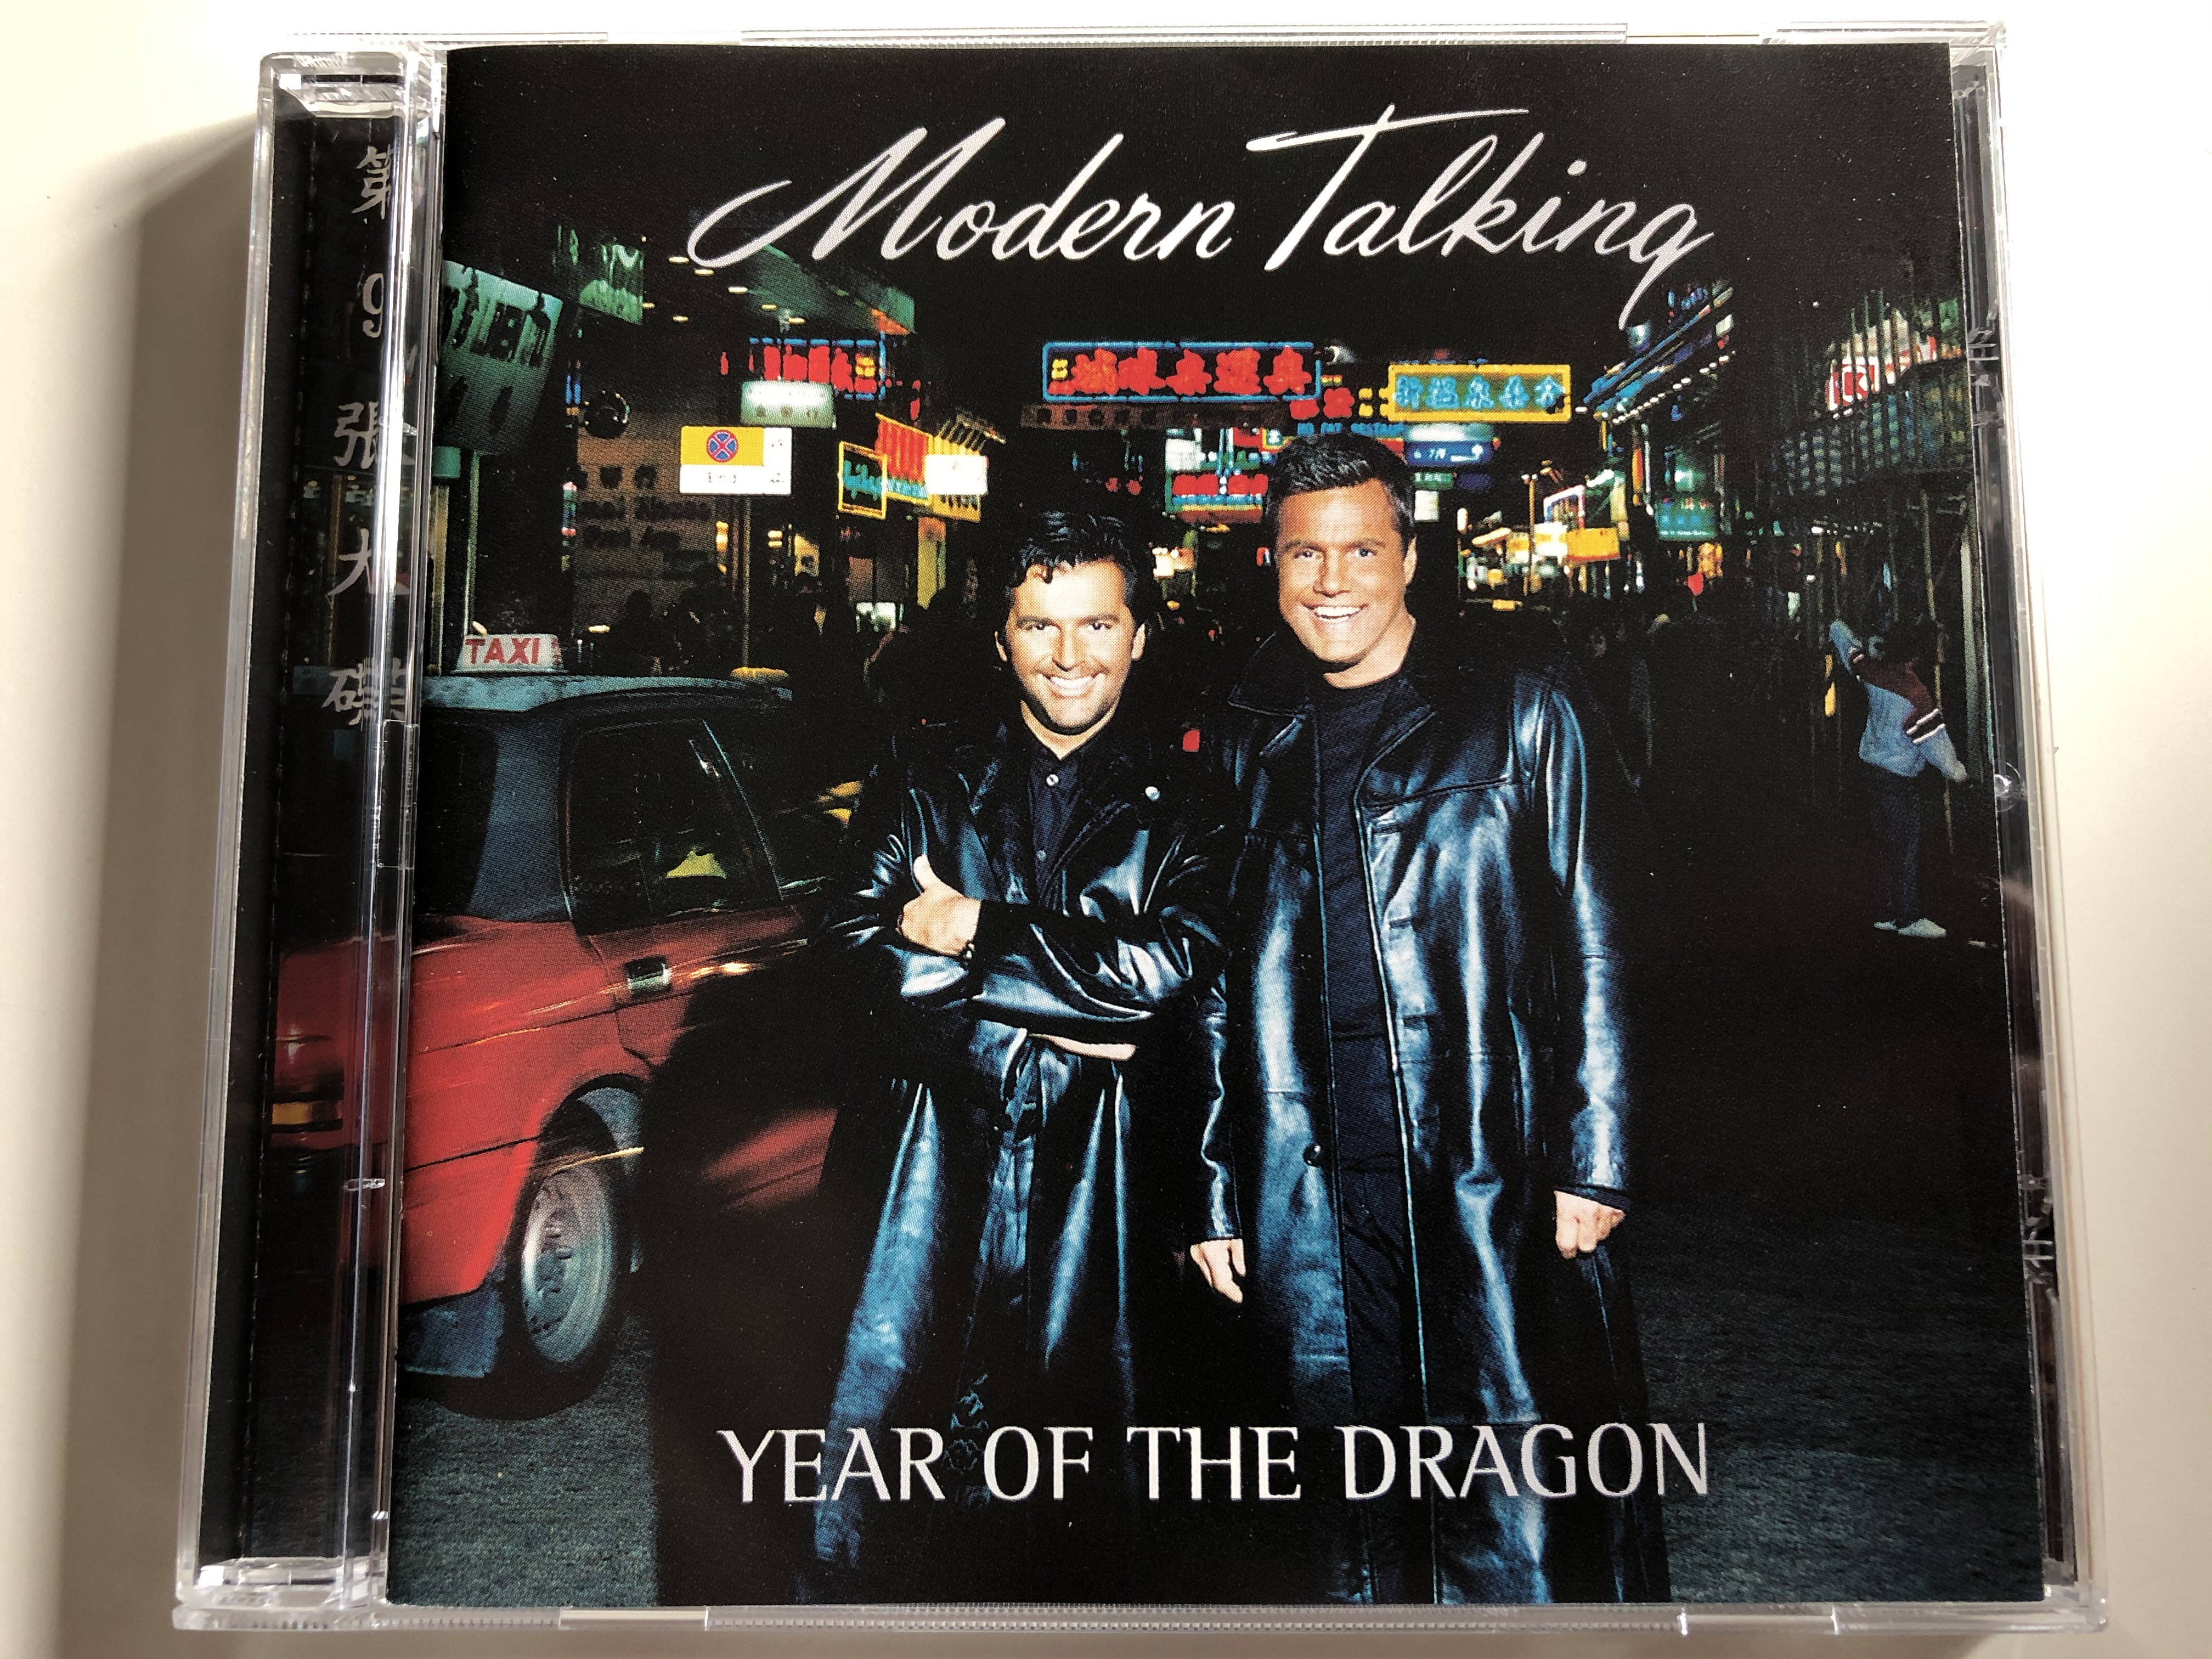 modern-talking-year-of-the-dragon-bmg-berlin-musik-gmbh-audio-cd-2000-74321-74517-2-1-.jpg